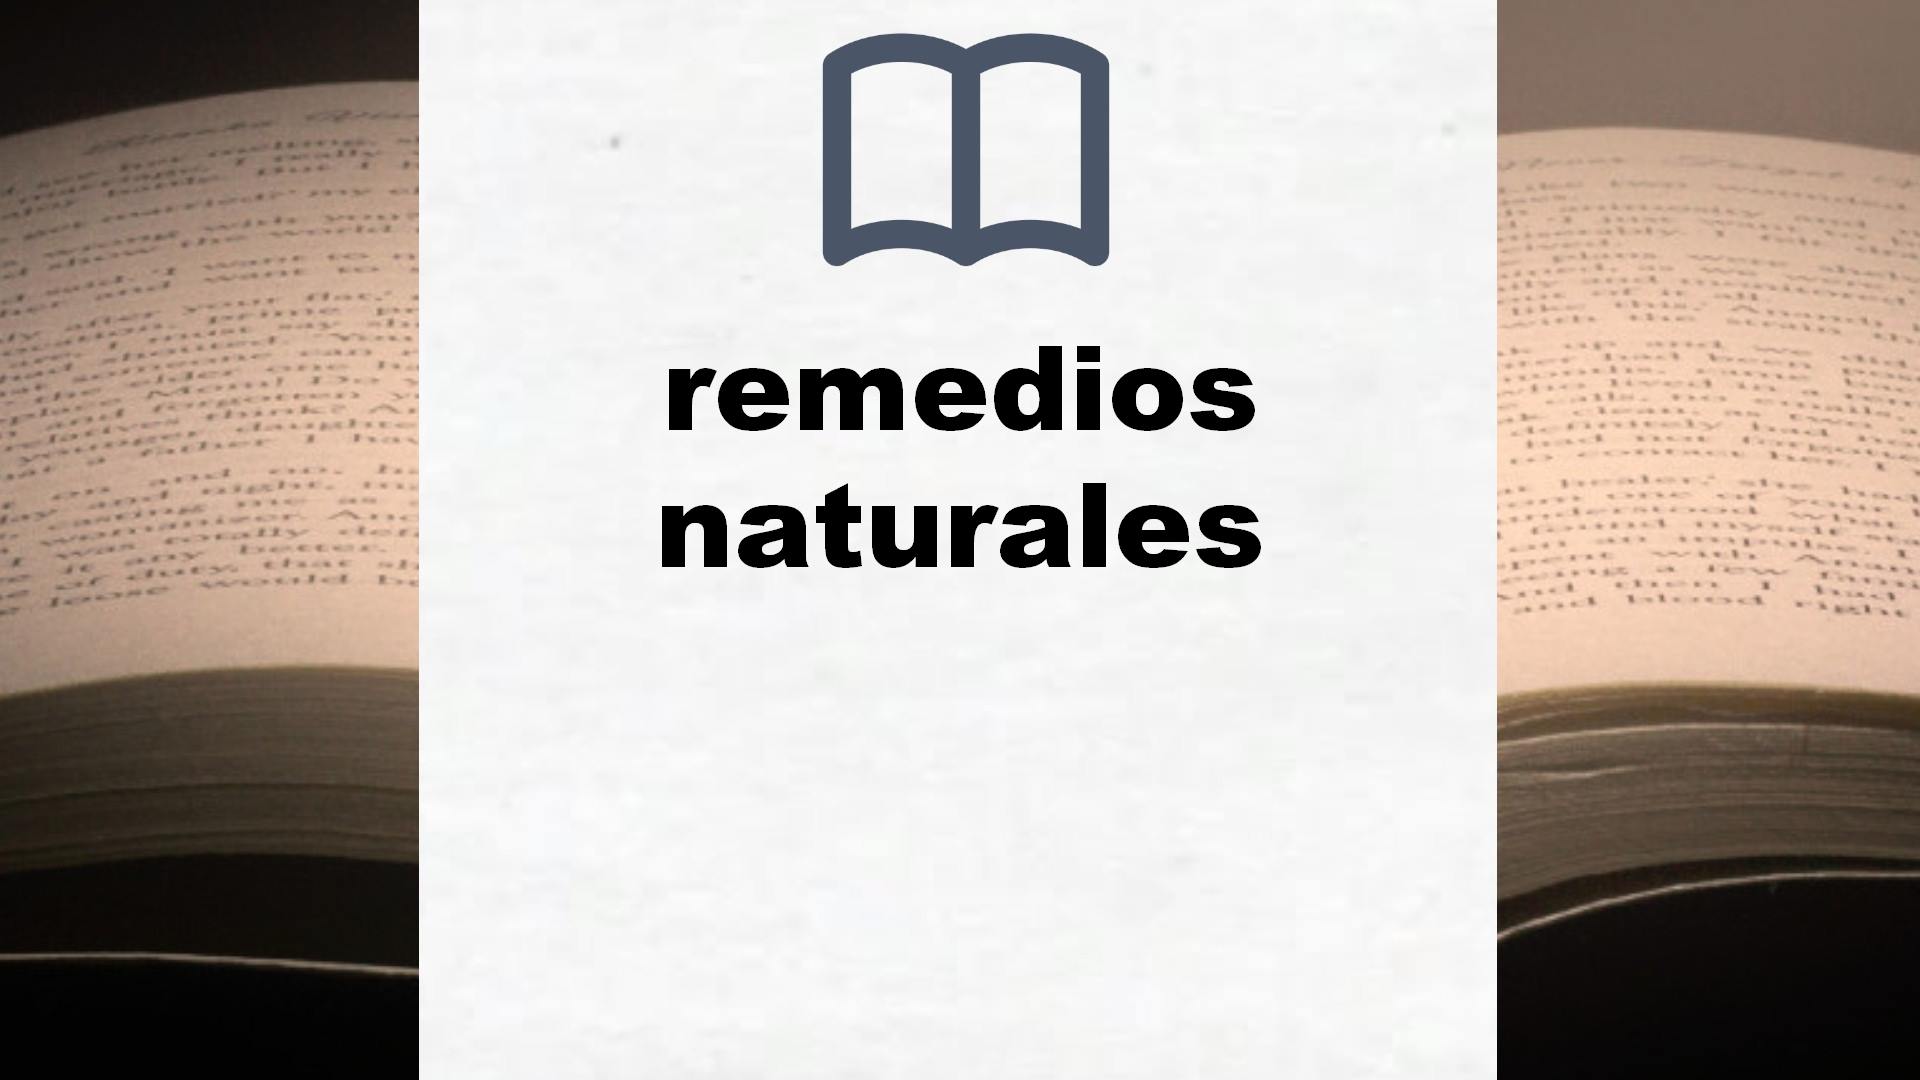 Libros sobre remedios naturales